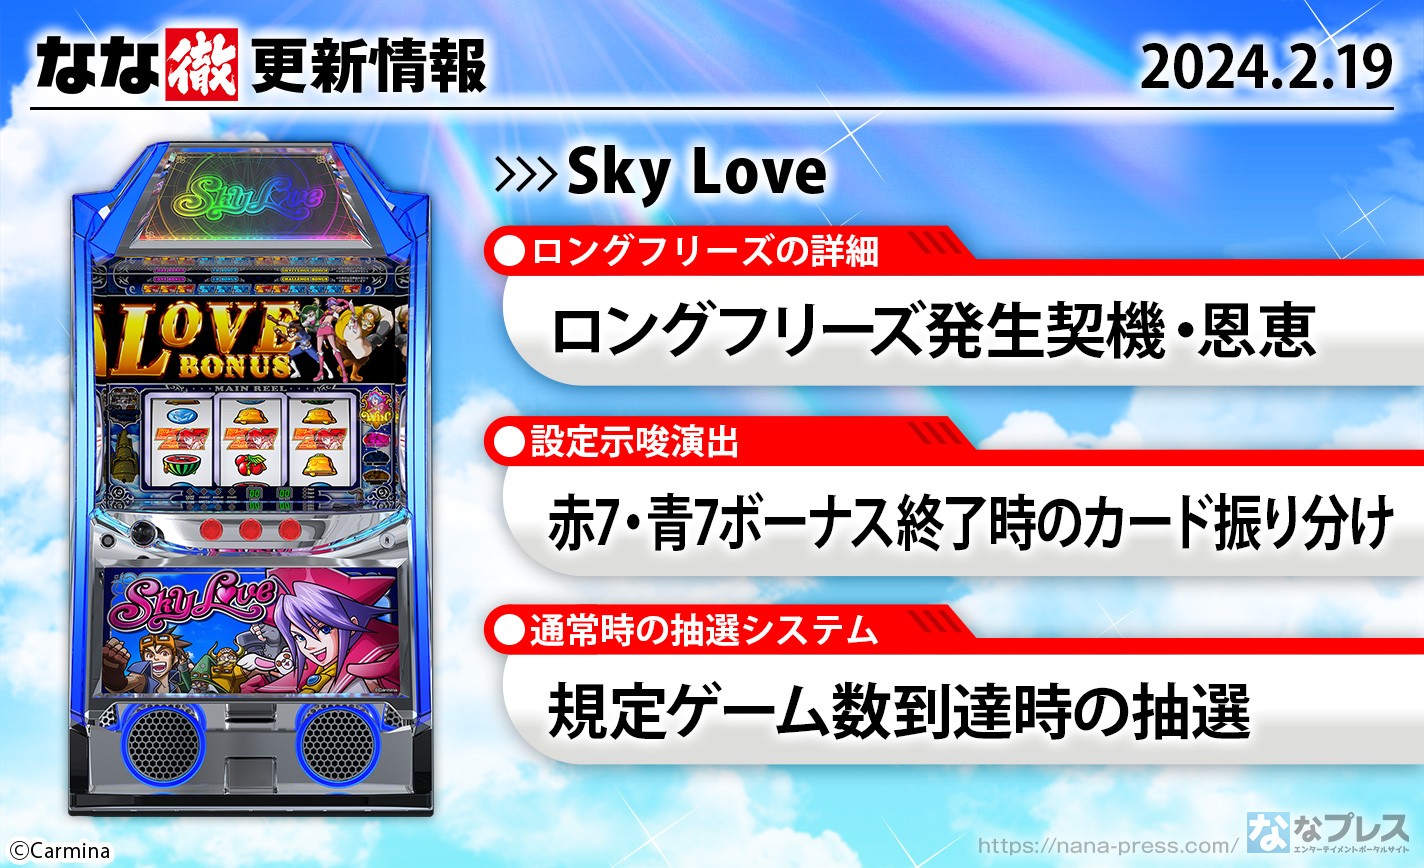 【Sky Love】ロングフリーズの発生契機・恩恵、赤7・青7ボーナス終了時のカードやスマTALKの設定示唆振り分け、規定ゲーム数到達時の抽選などを更新しました。【2月19日解析情報更新】 eyecatch-image